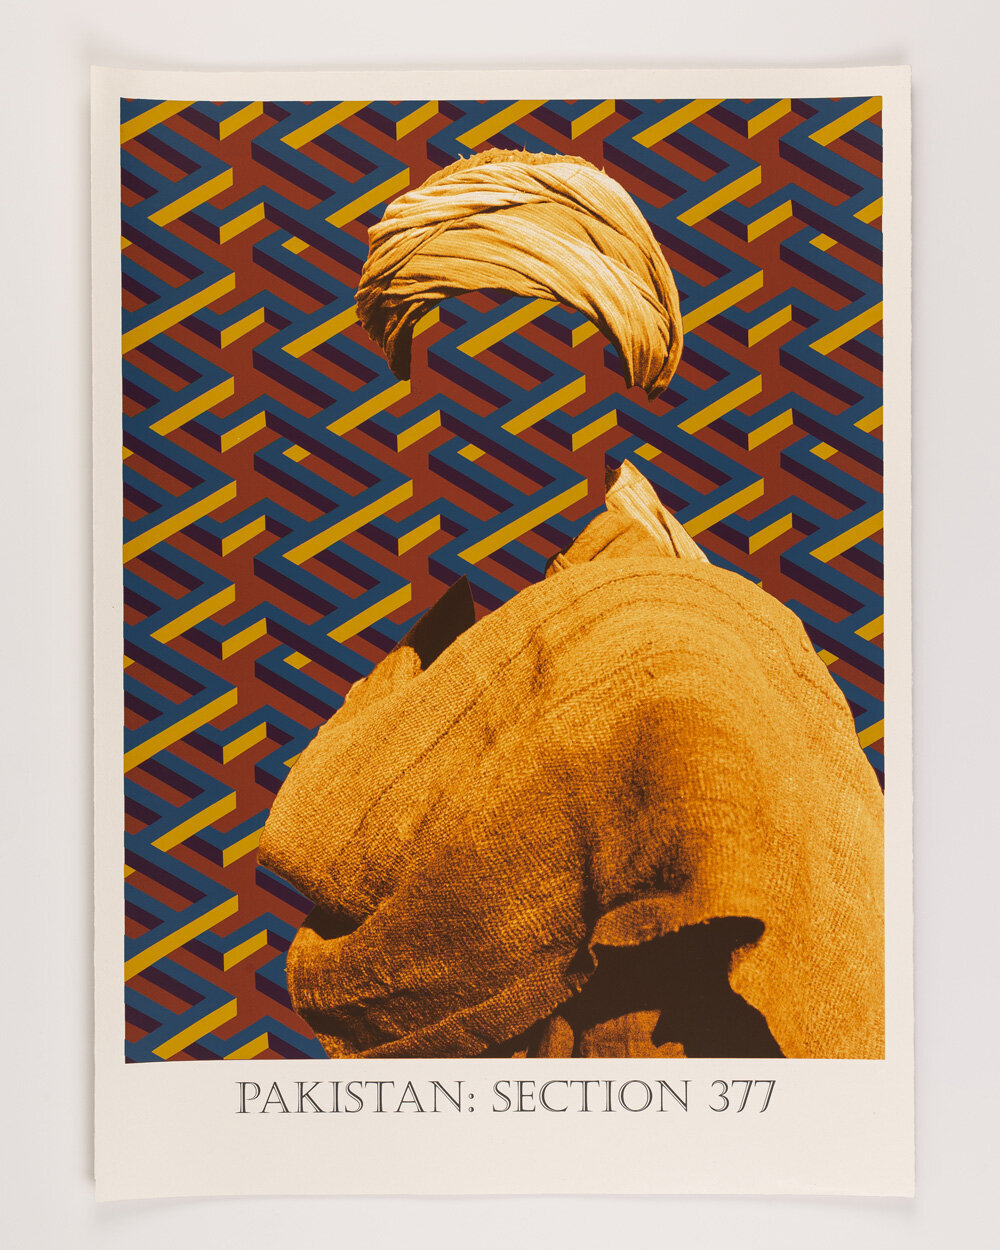 Pakistan: Section 377